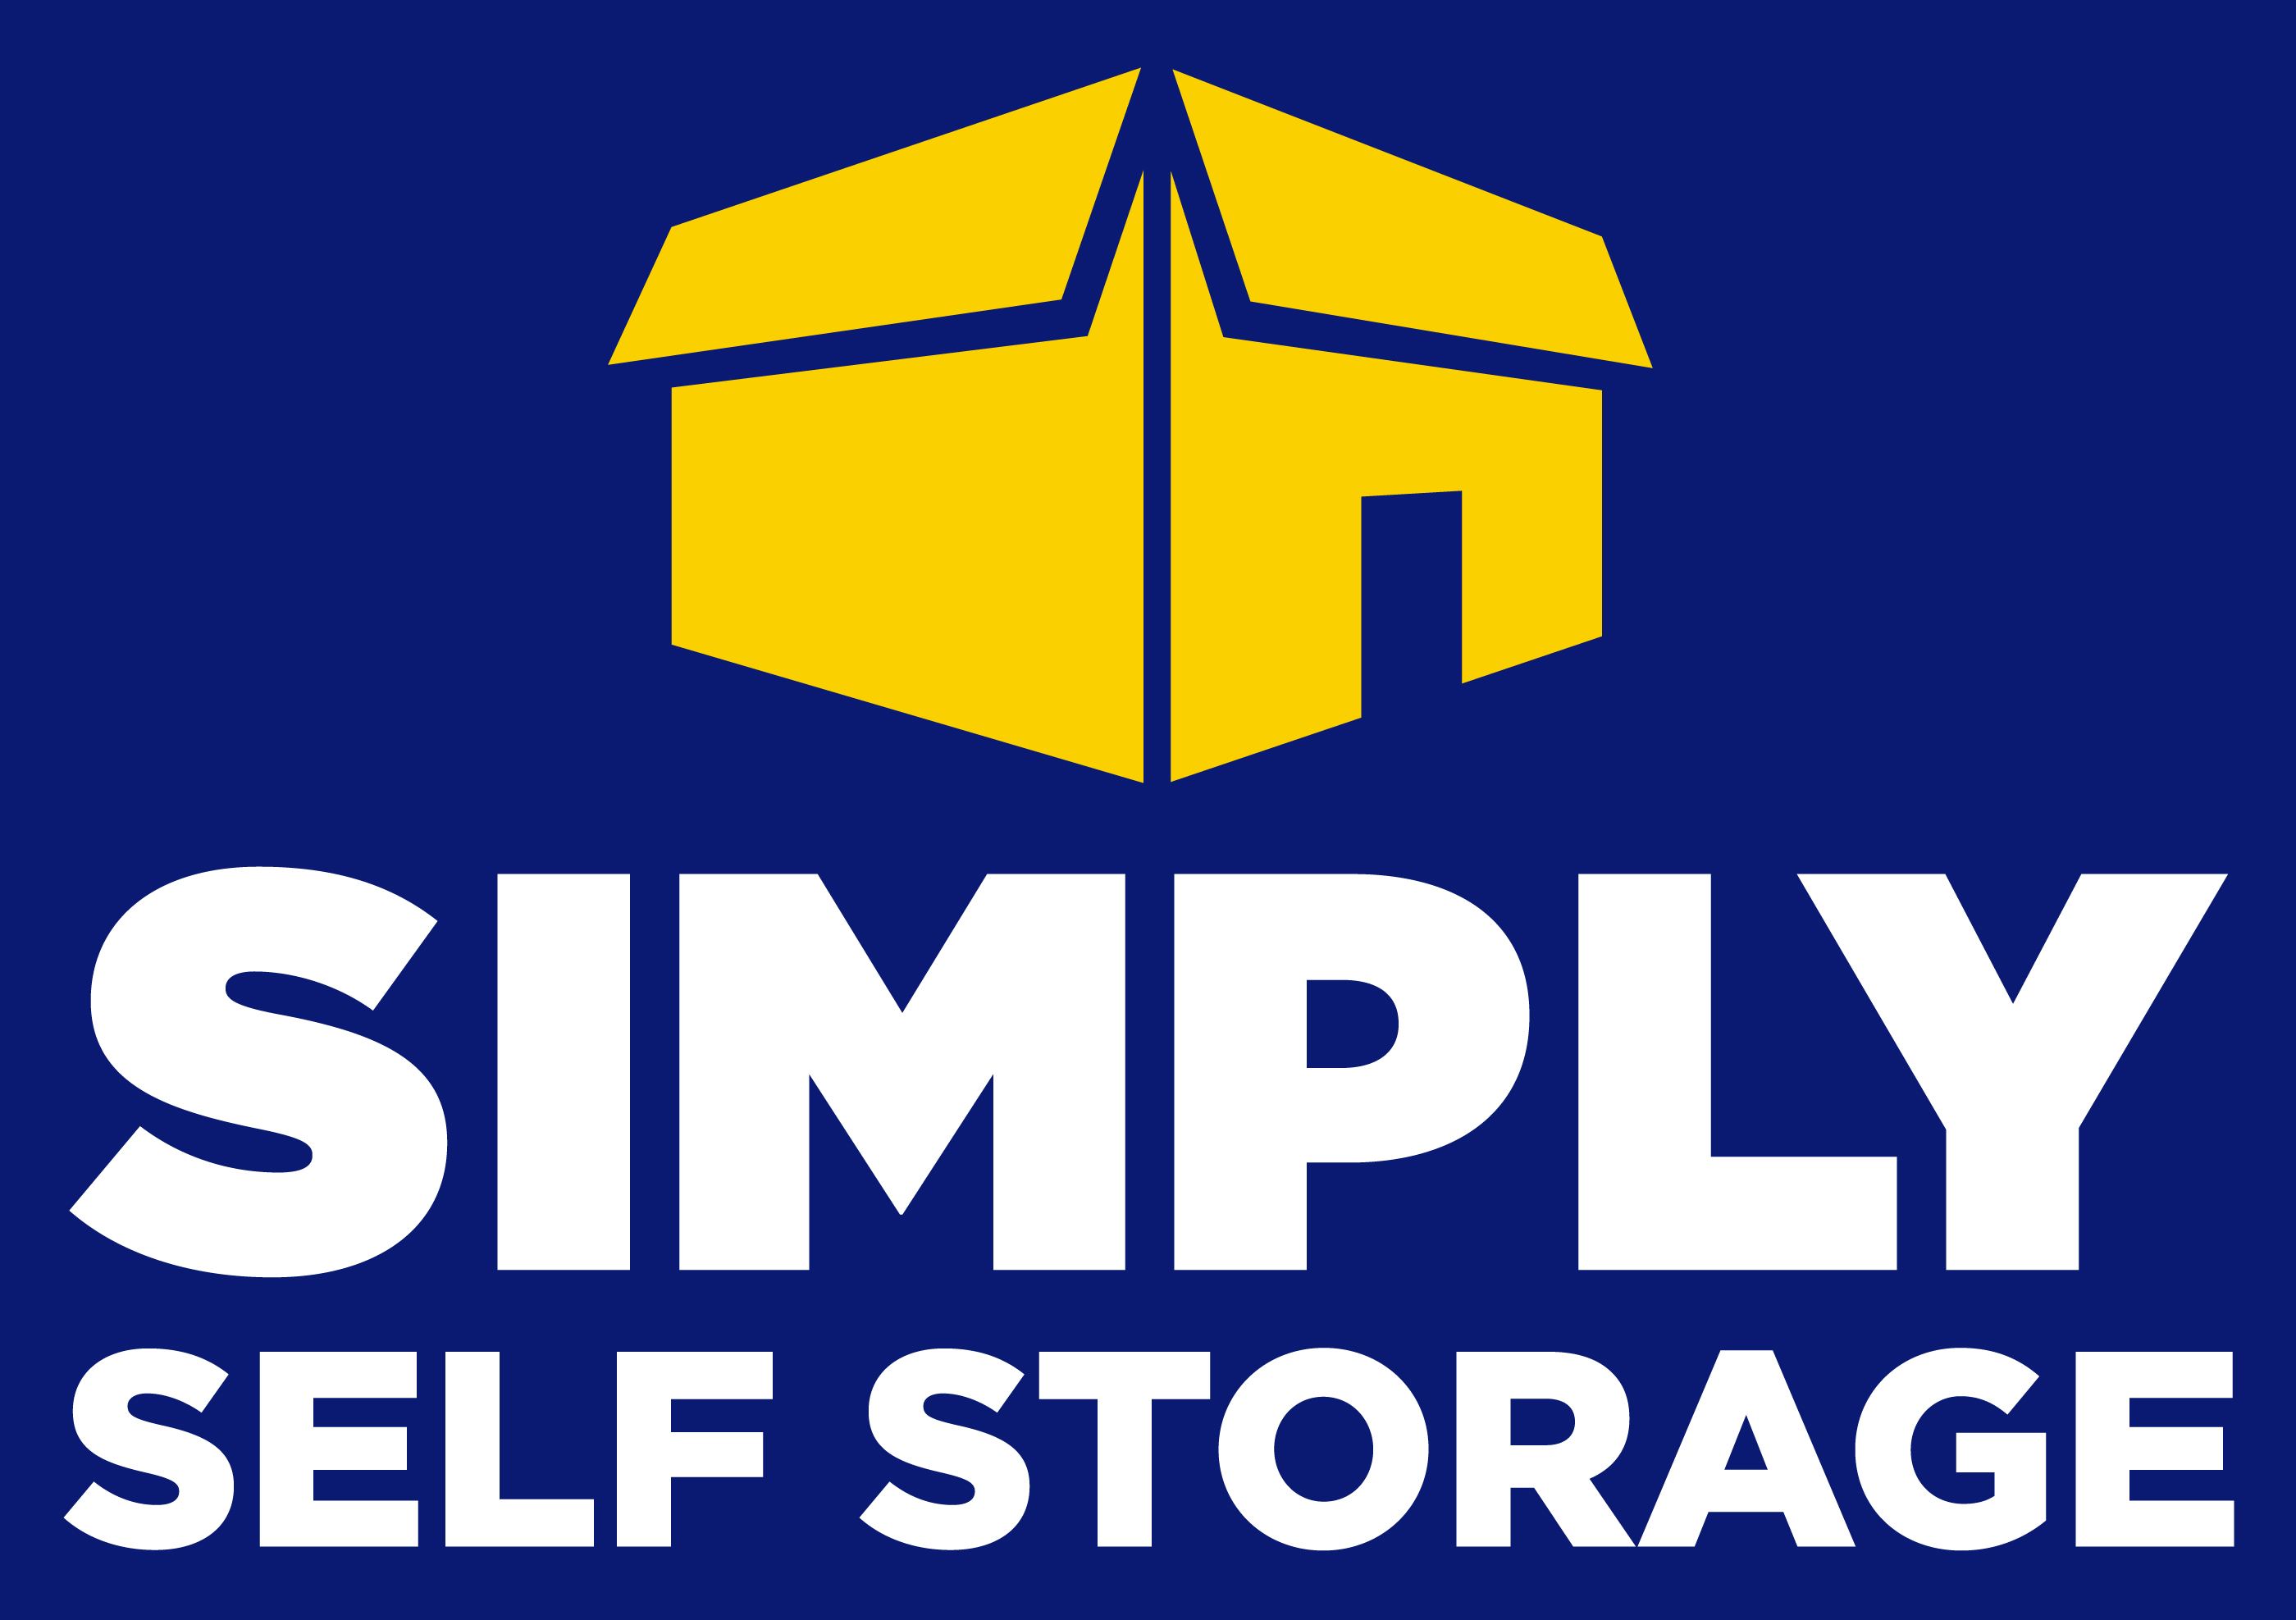 Simply Self Storage Logo